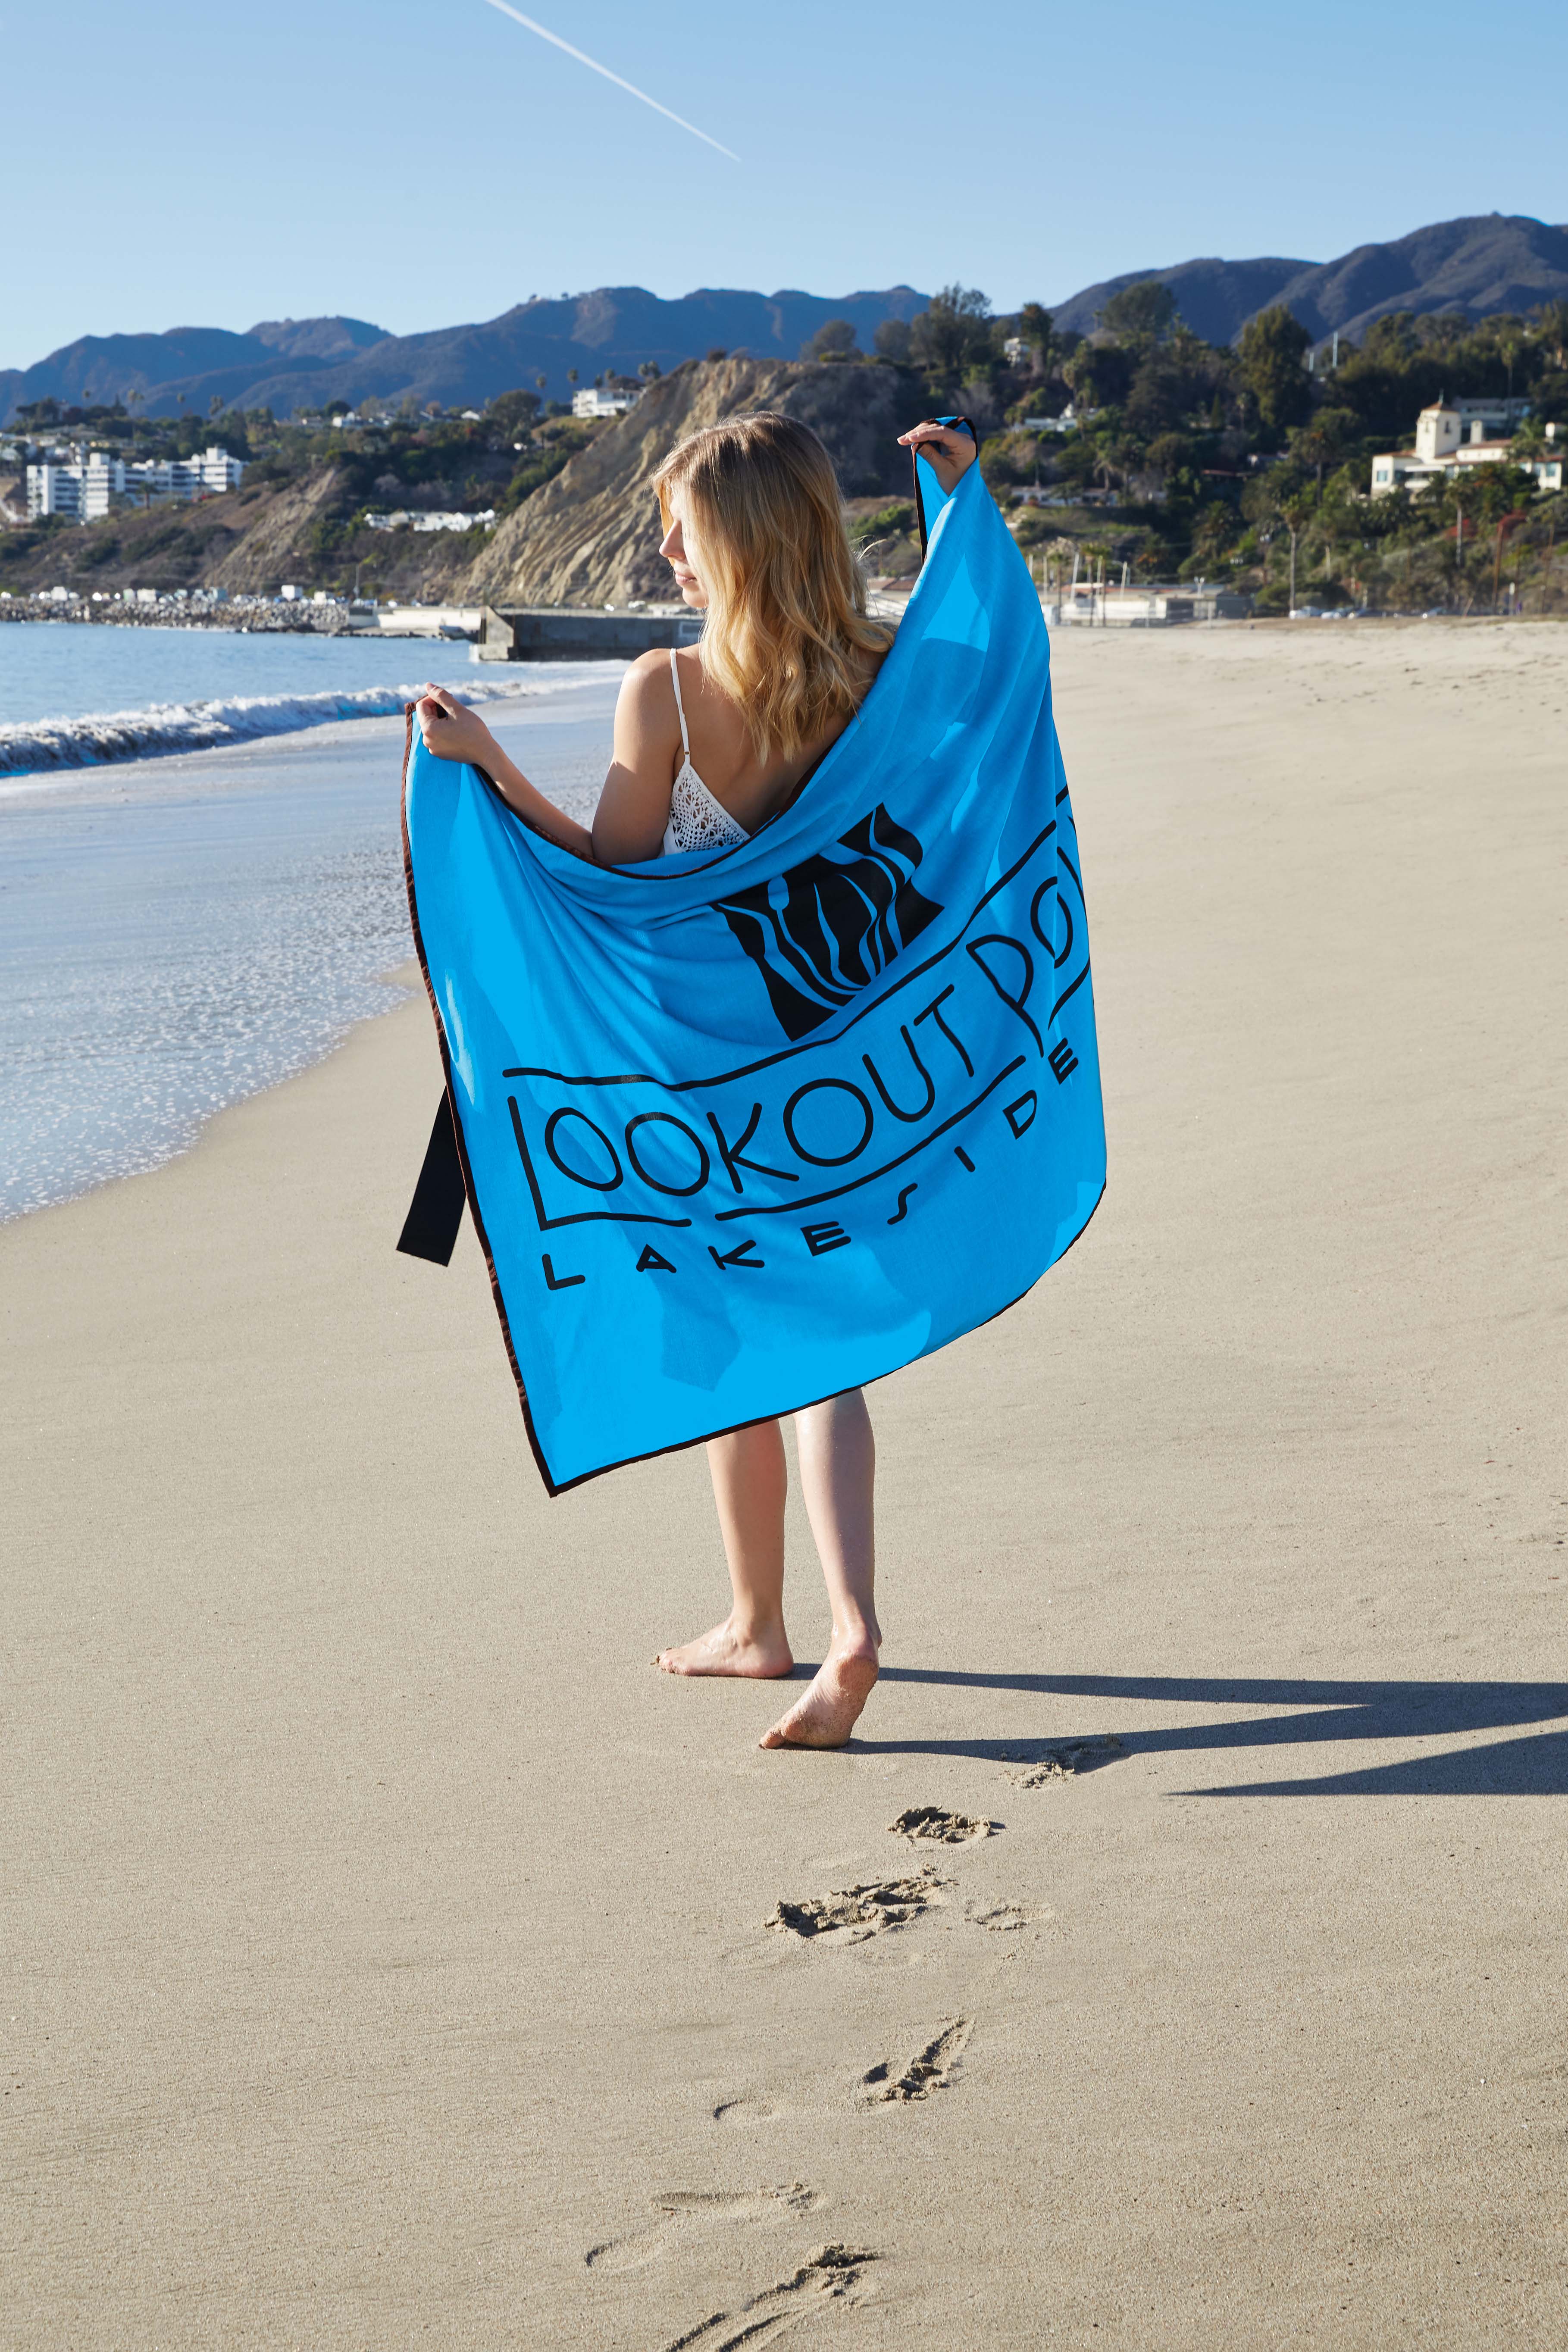 Protowel, Kanata, Model, Beach, Sand repellent towels, t-shirts